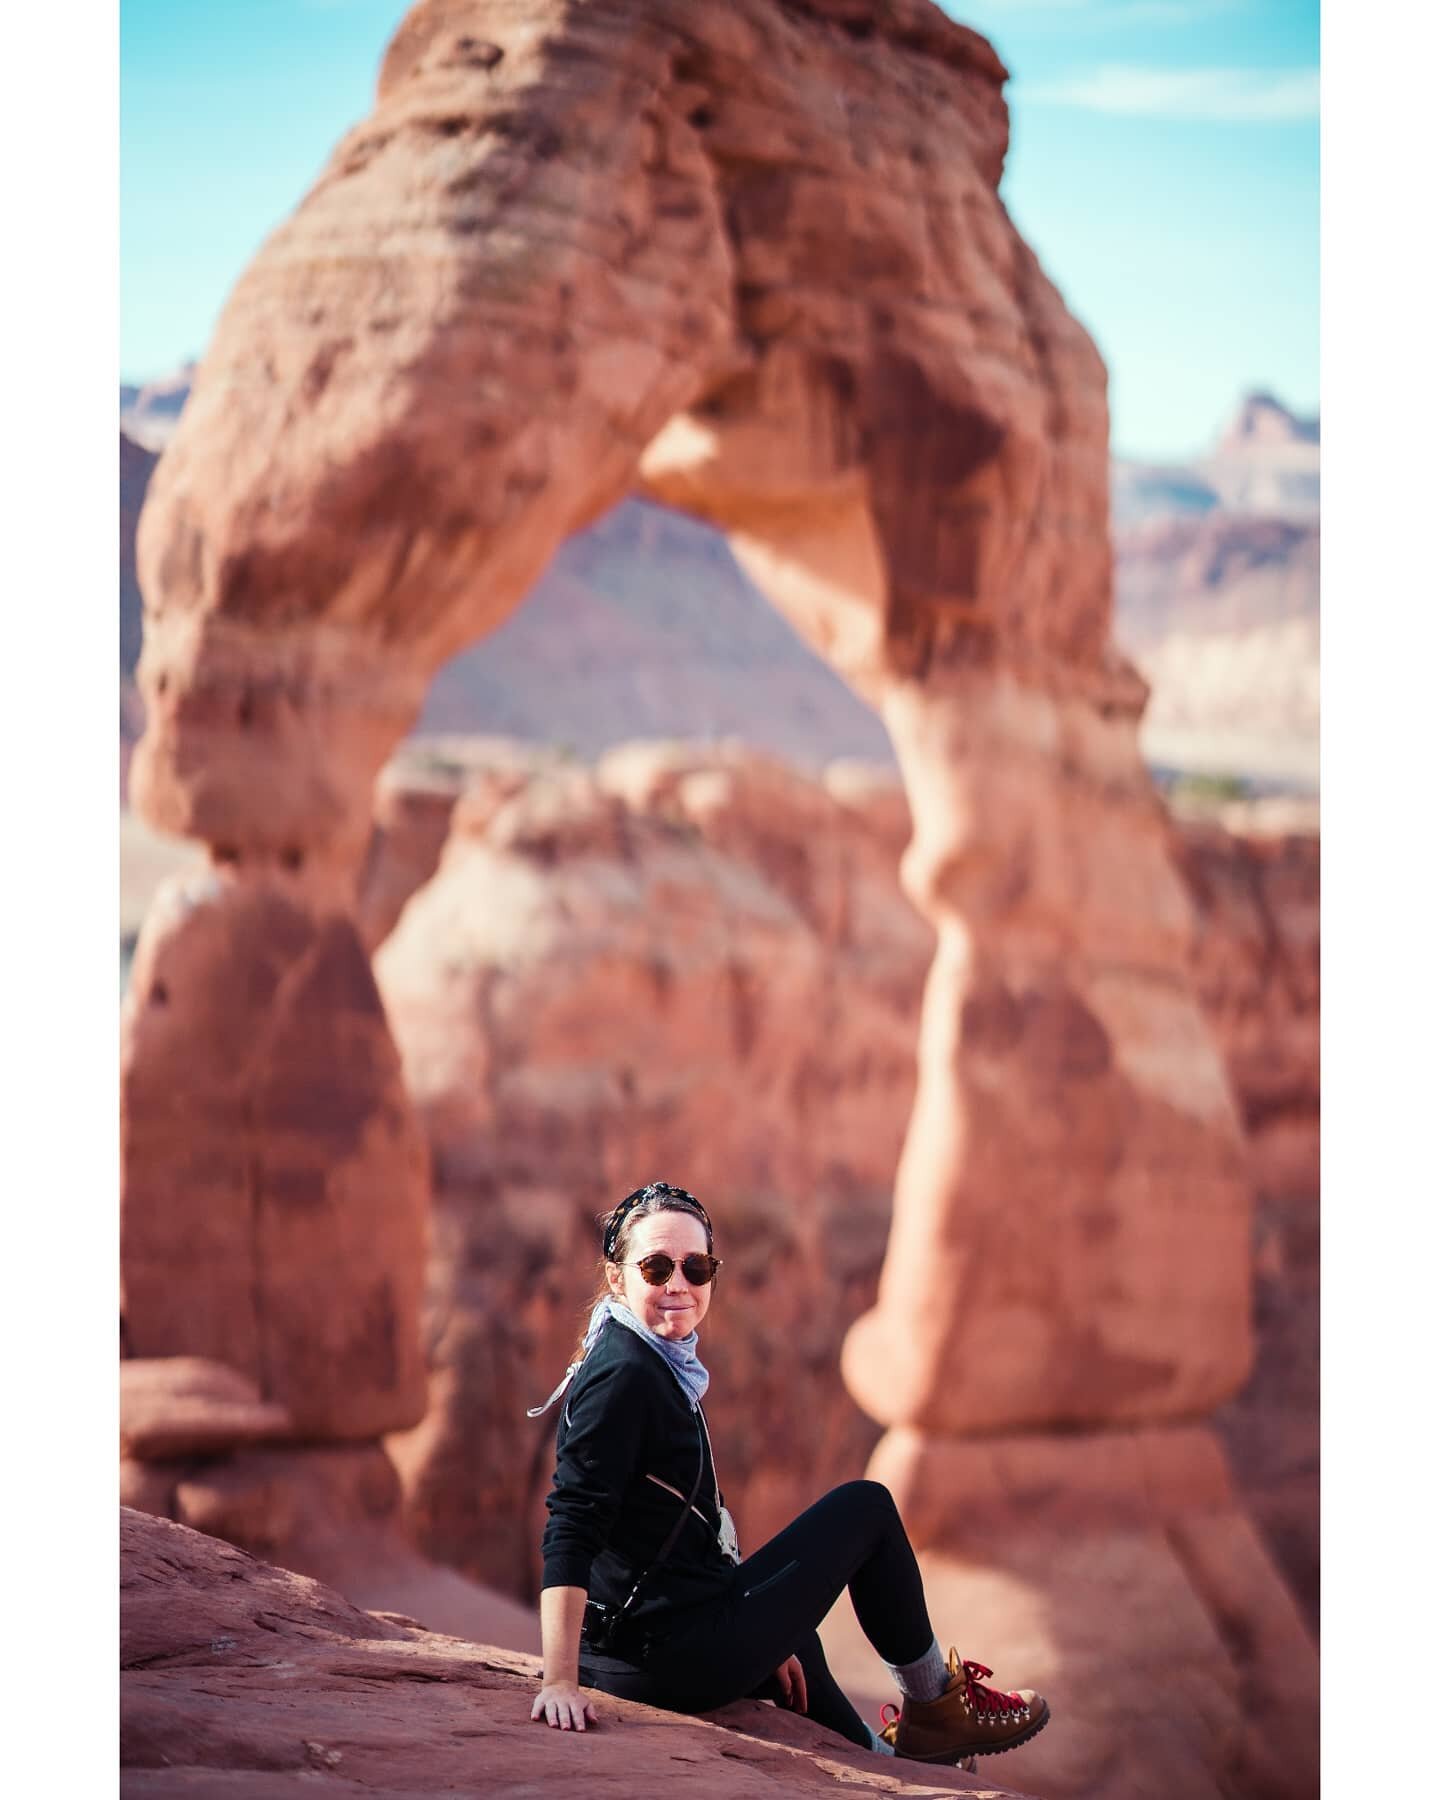 The best hiking partner

.
.
.
.
.

#delicatearch #archesnationalpark #utah #moab #sandstone #portrait_ig #portraitpage #ig_portrait #profile_vision #portrait #portraitphotography #sonya7riii #sonyalpha #photography #sel85f14gm #mirrorless #igersofut